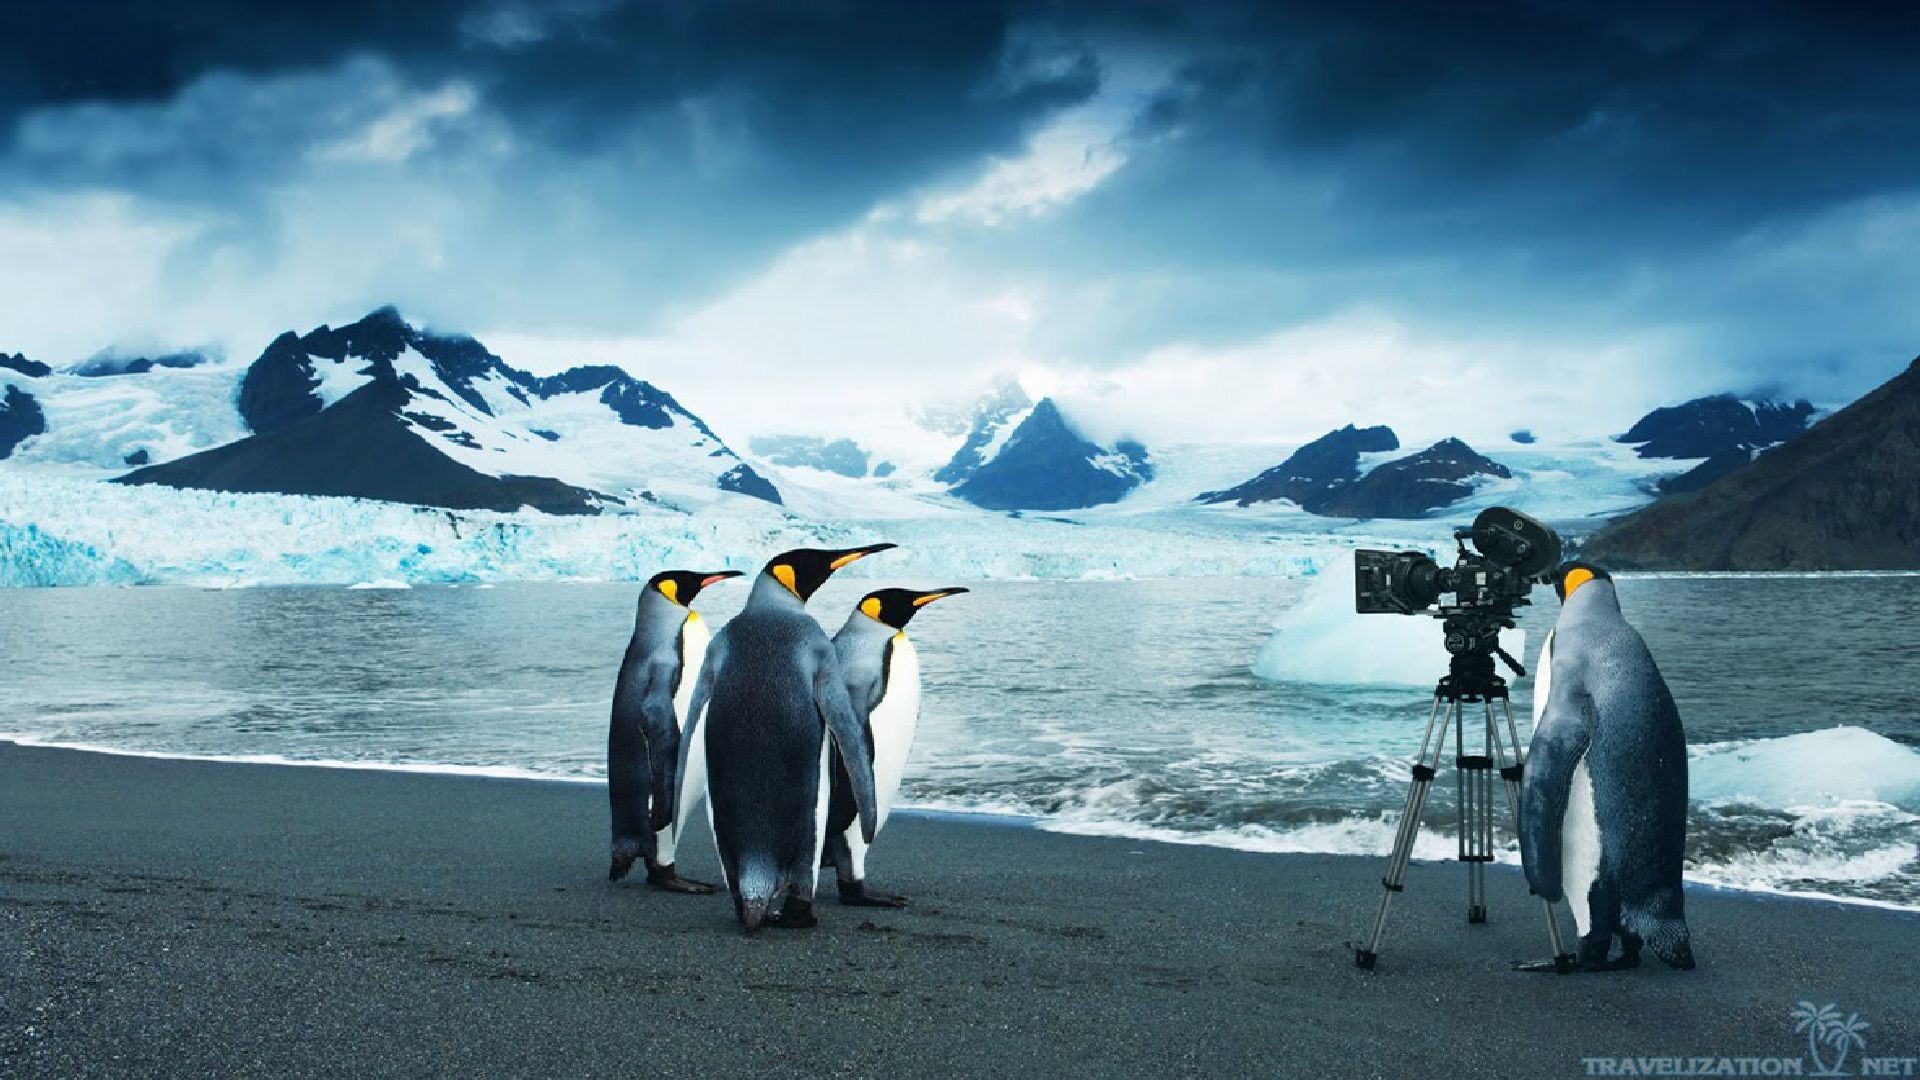 pittsburgh penguins wallpaper hd